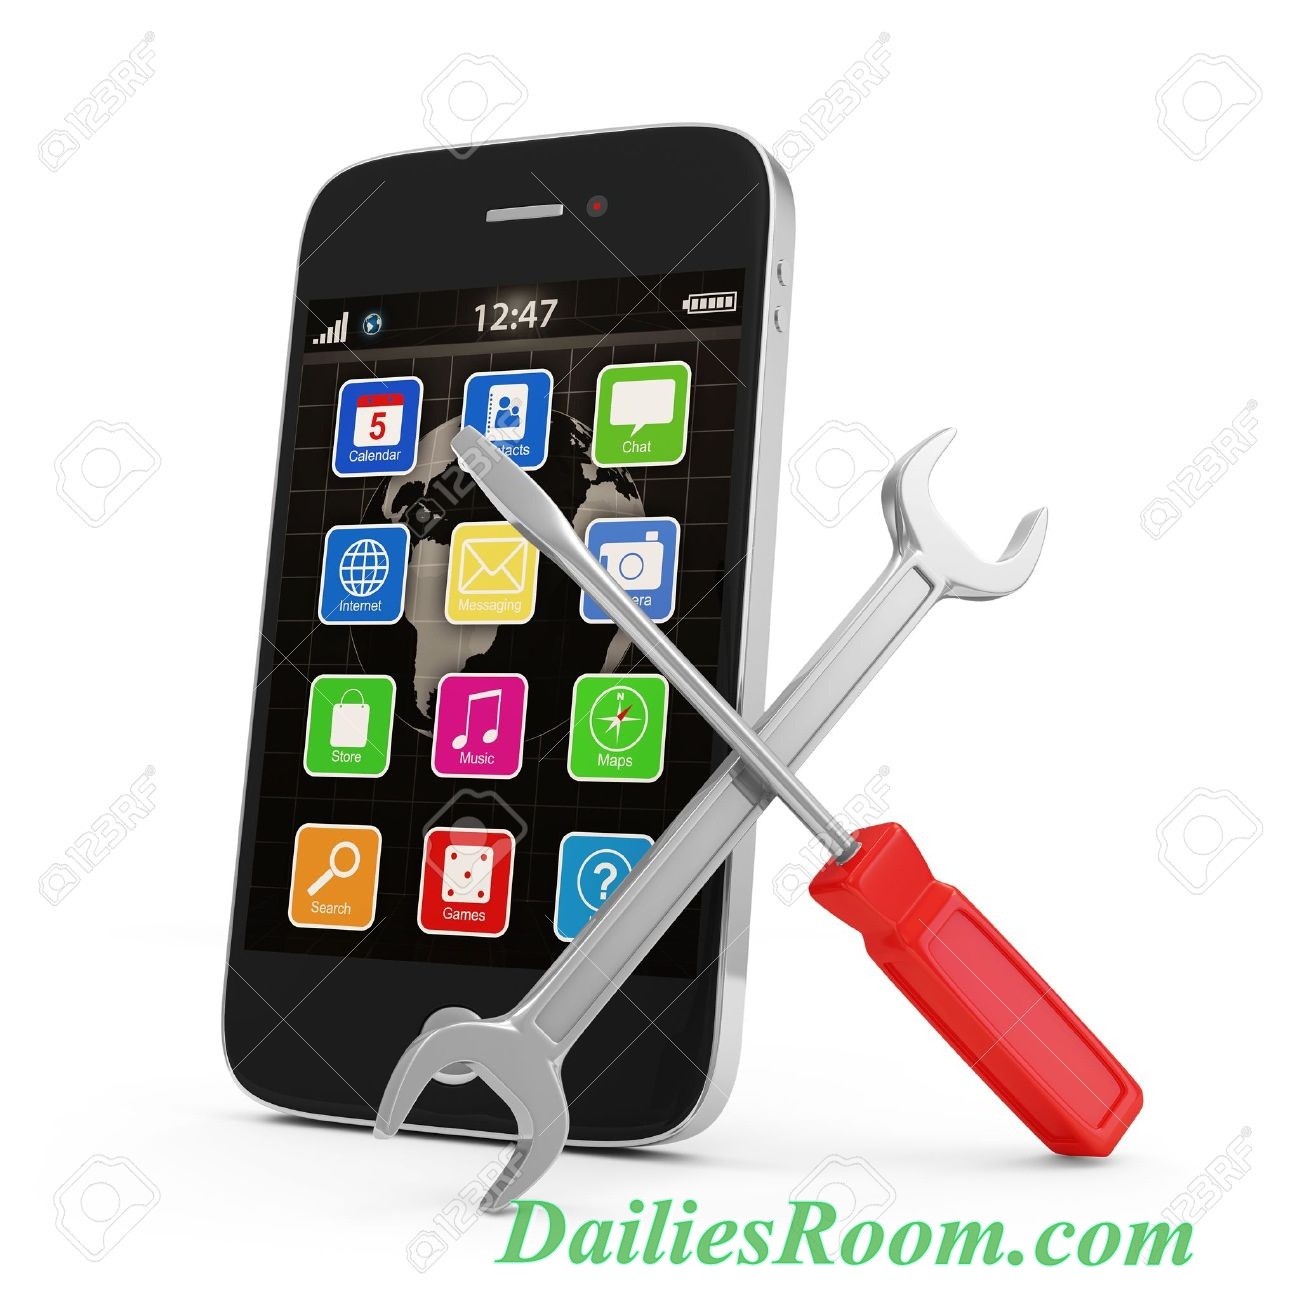 mobile-phone-repair - DailiesRoom.com